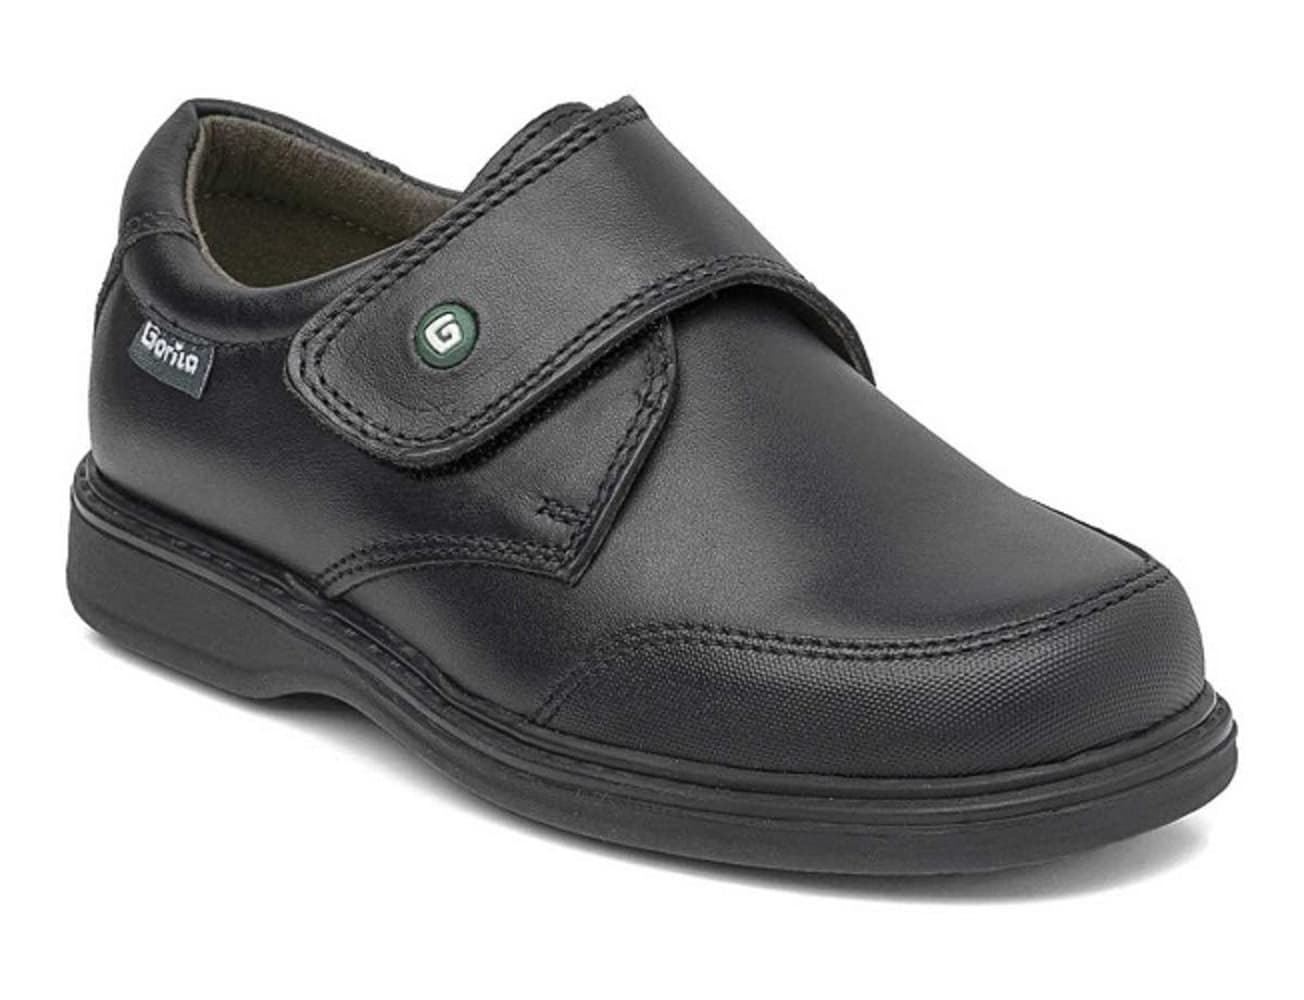 Gorilla Boy's Black School Shoe with Toe Cap - Image 1